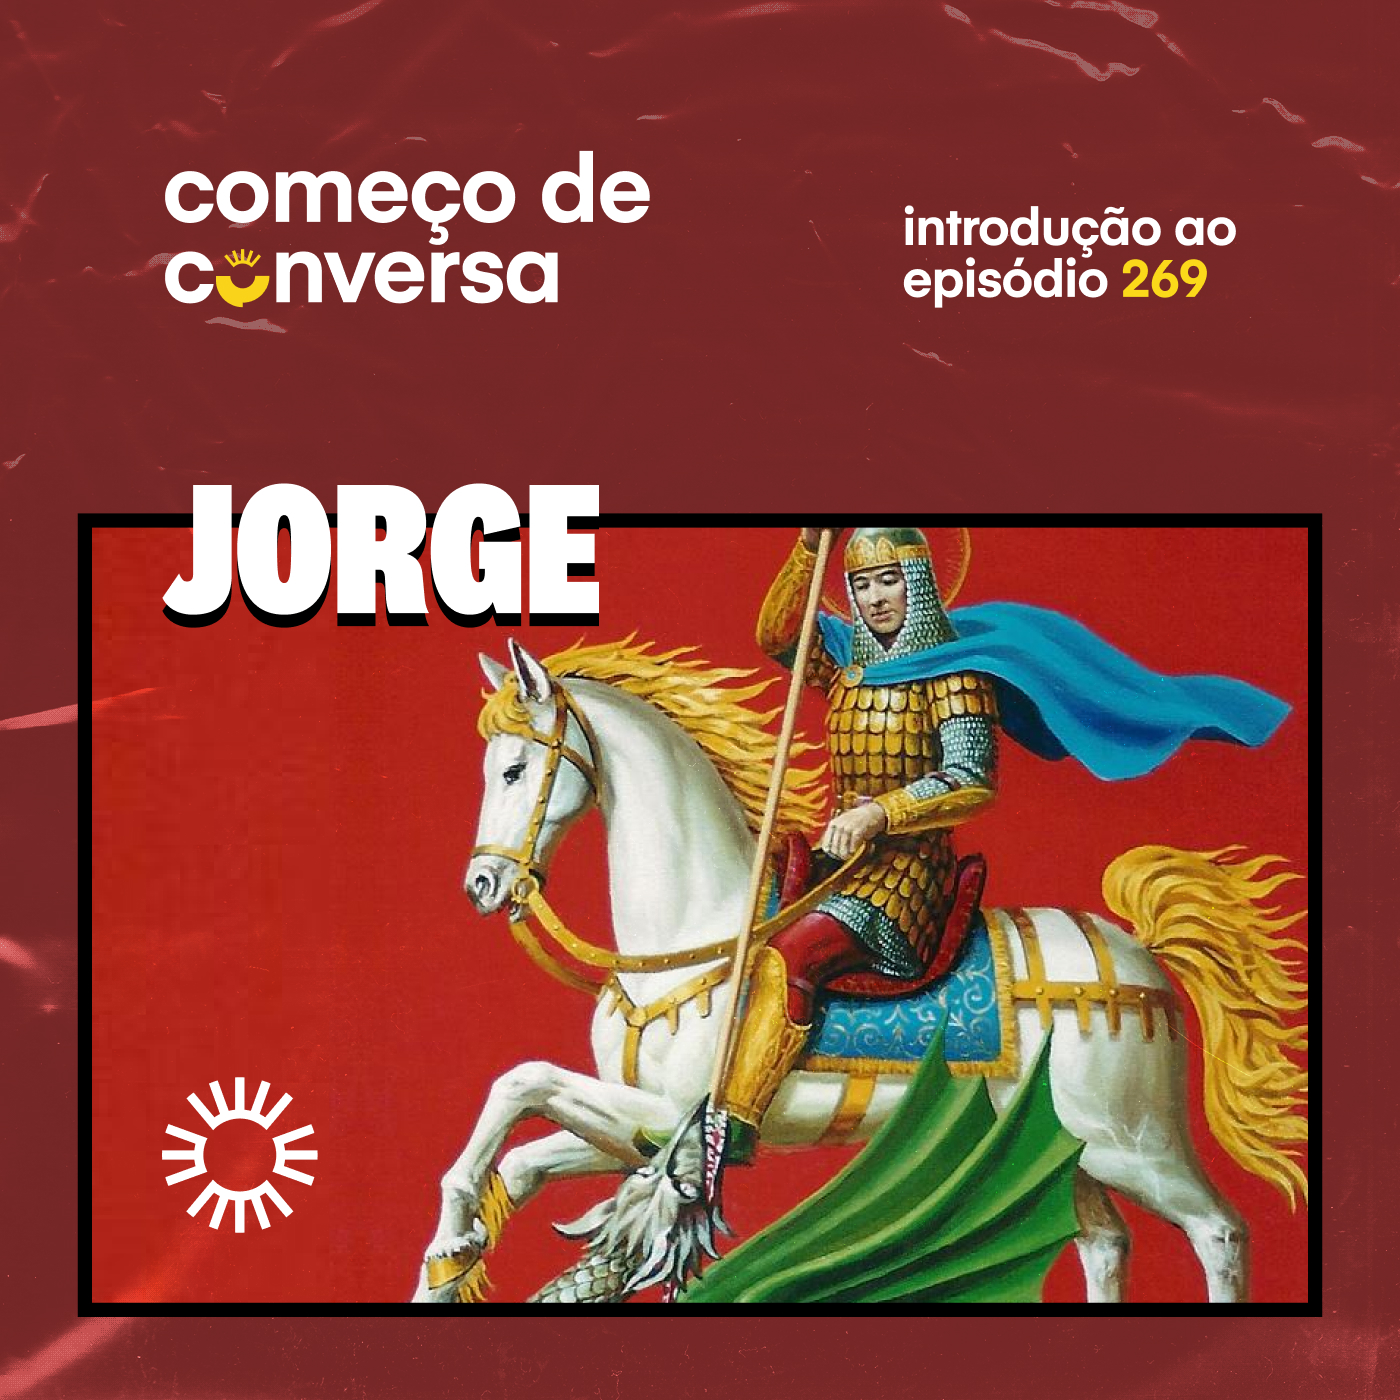 CDC: Jorge